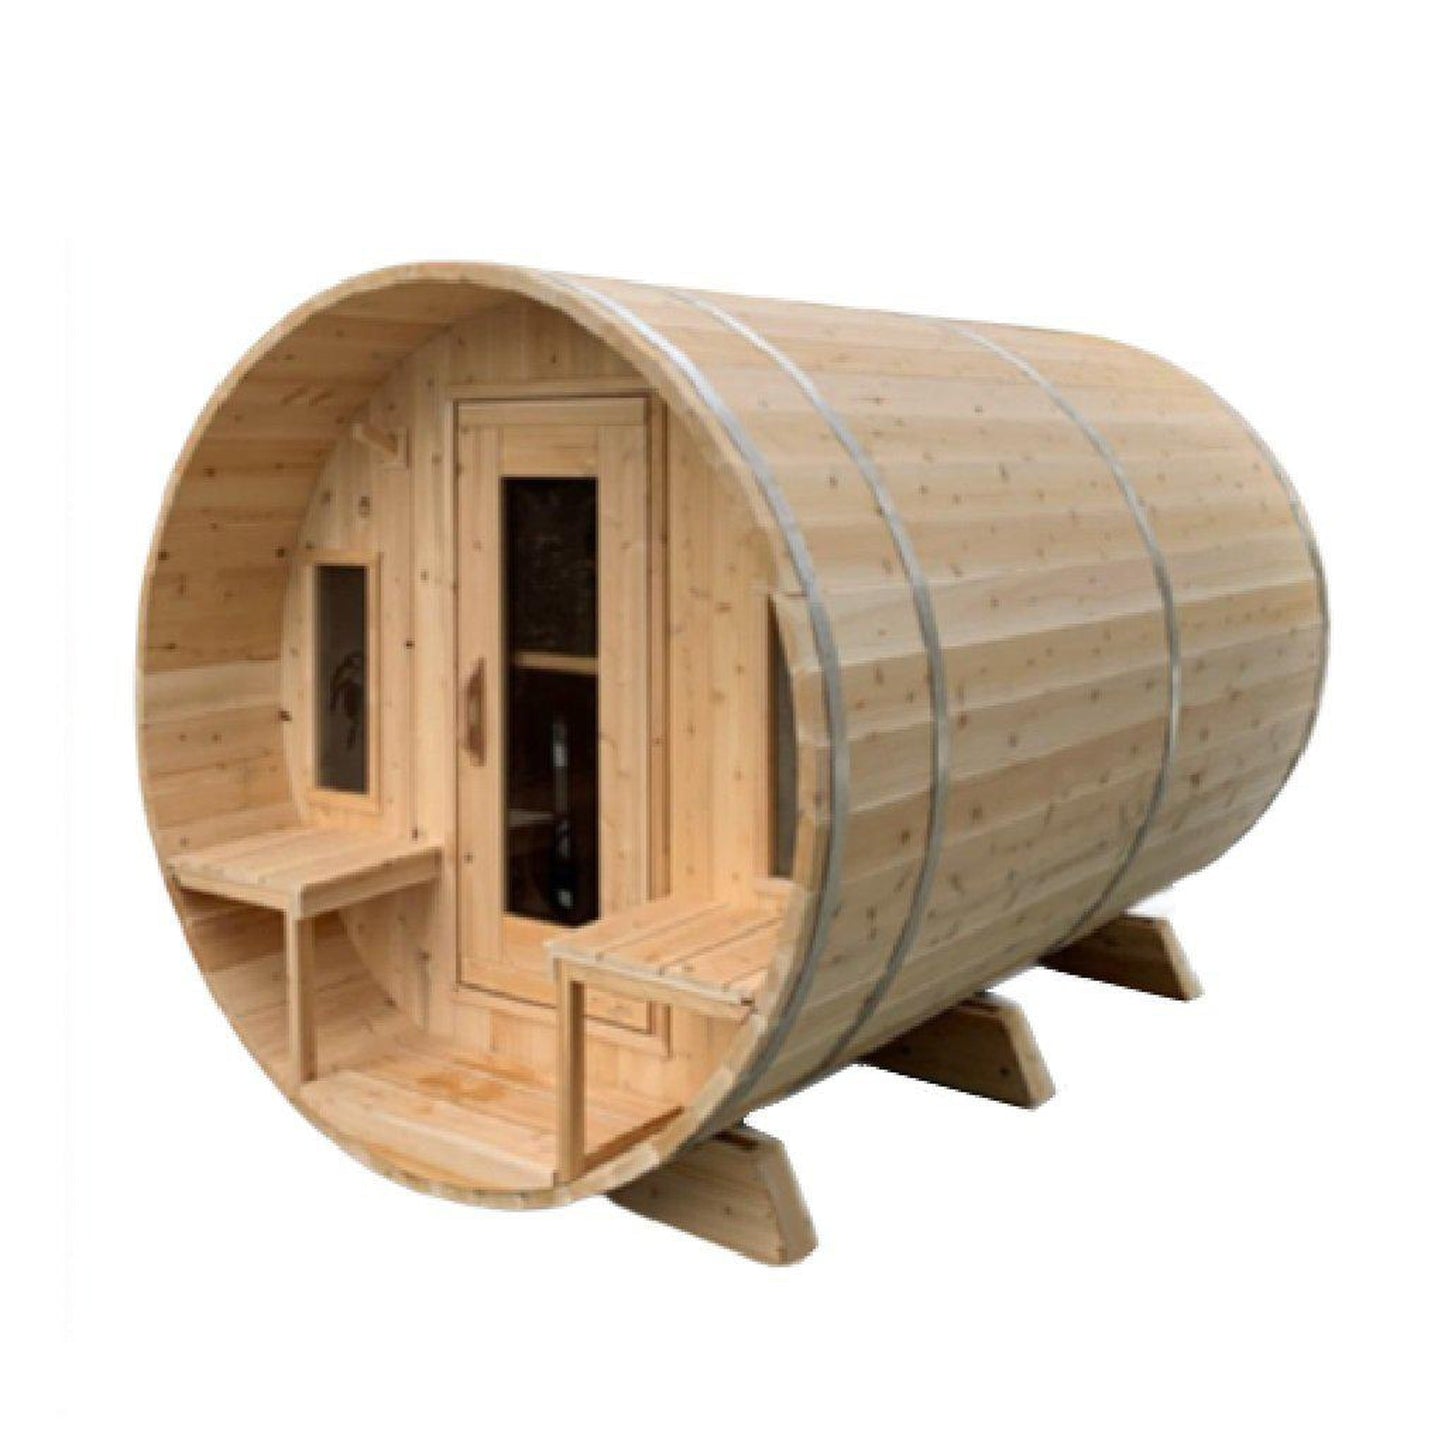 Dundalk LeisureCraft Canadian Timber Tranquility 2-6 Person White Cedar Outdoor Barrel Sauna